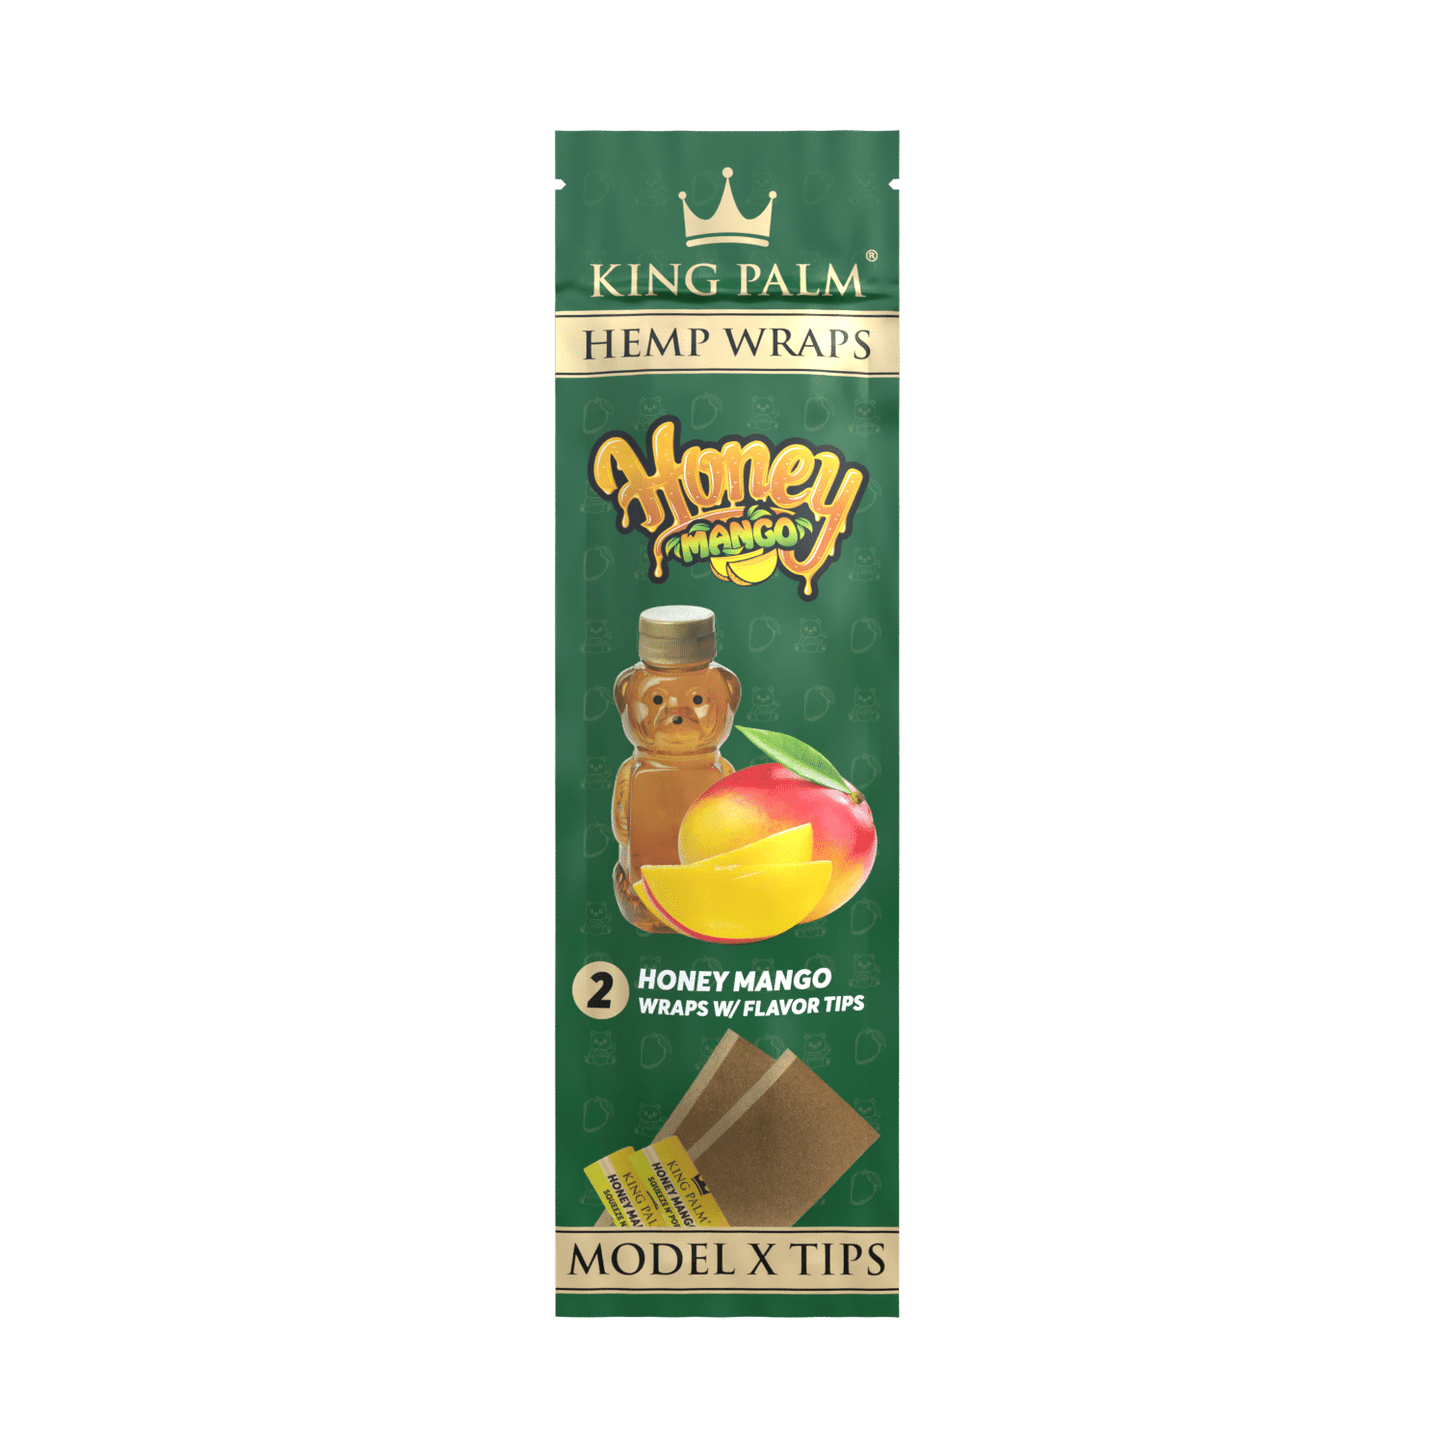 King Palm Hemp Wraps - Honey Mango